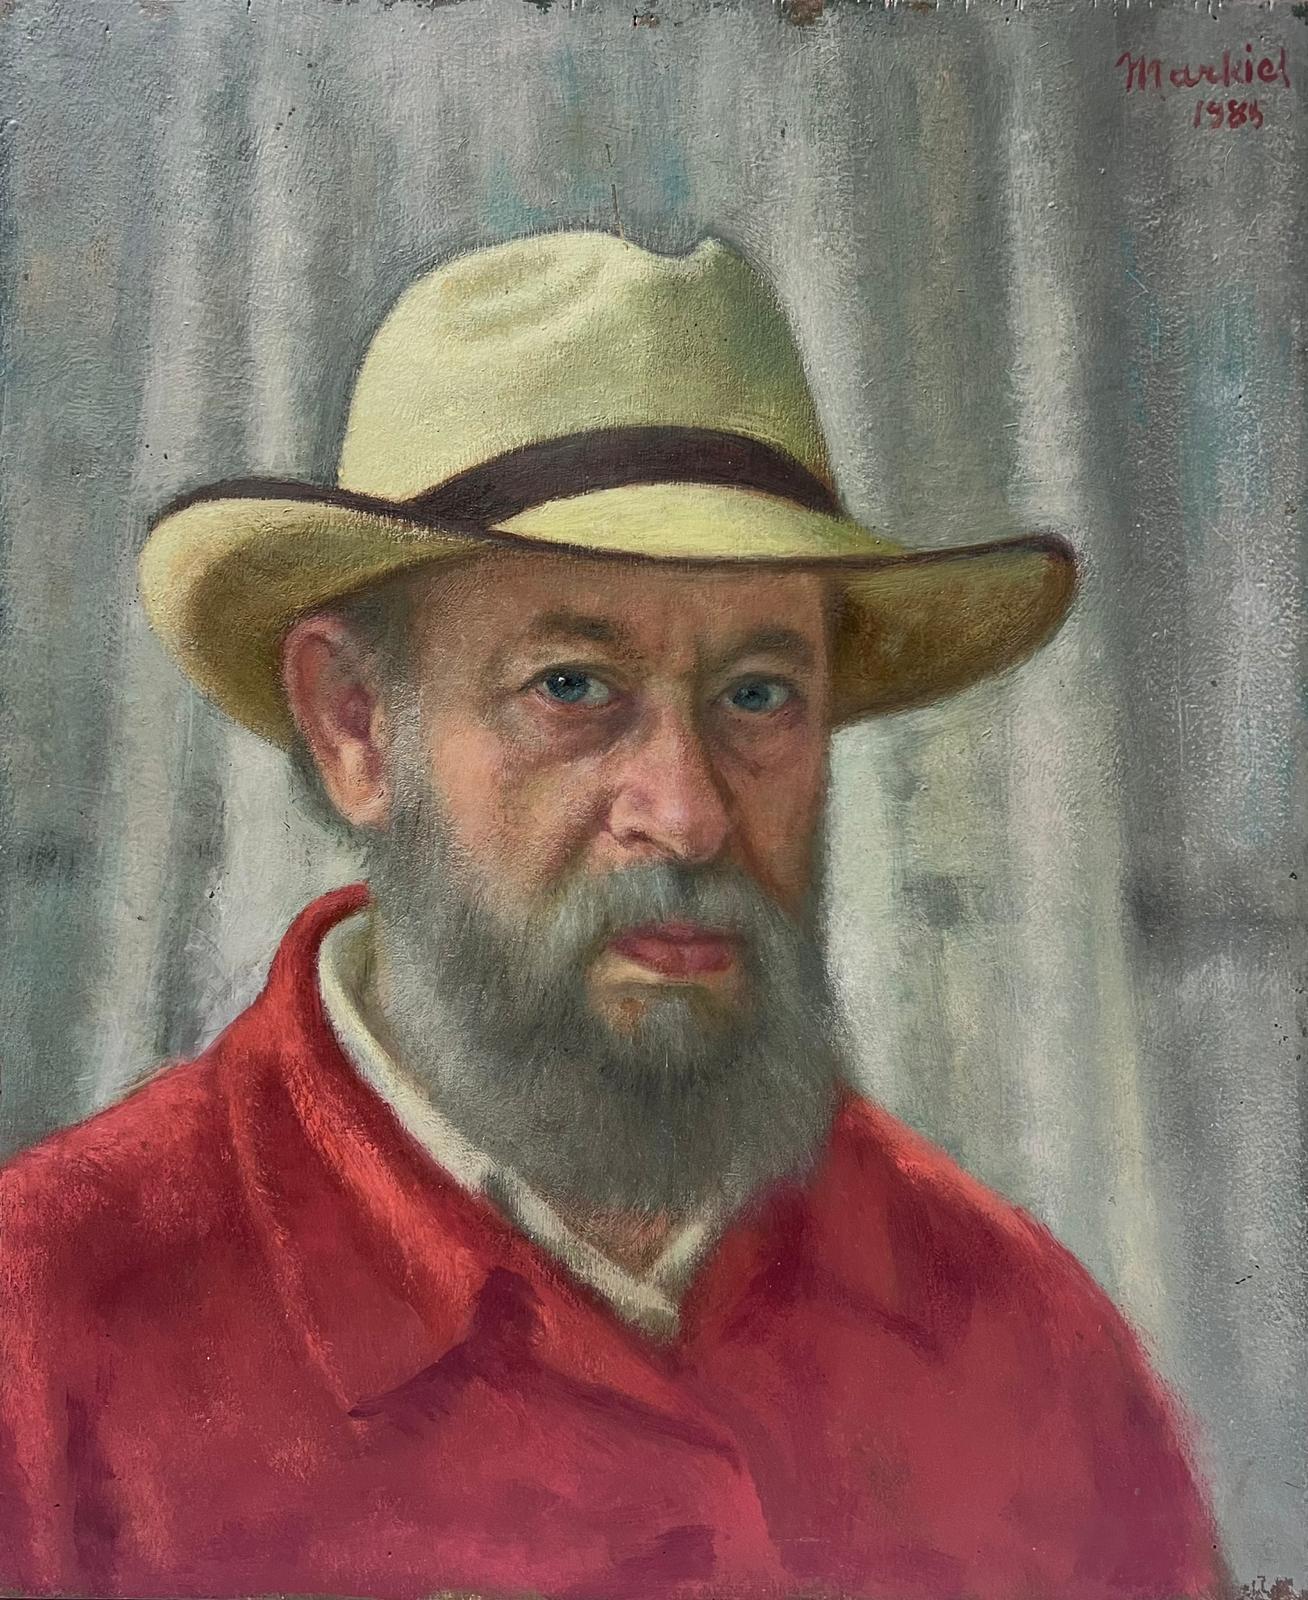 Jacob Markiel Portrait Painting – Selbstporträt des Künstlers mit Hut, ausgestellt im Pariser Salon 1985, großes Ölgemälde 